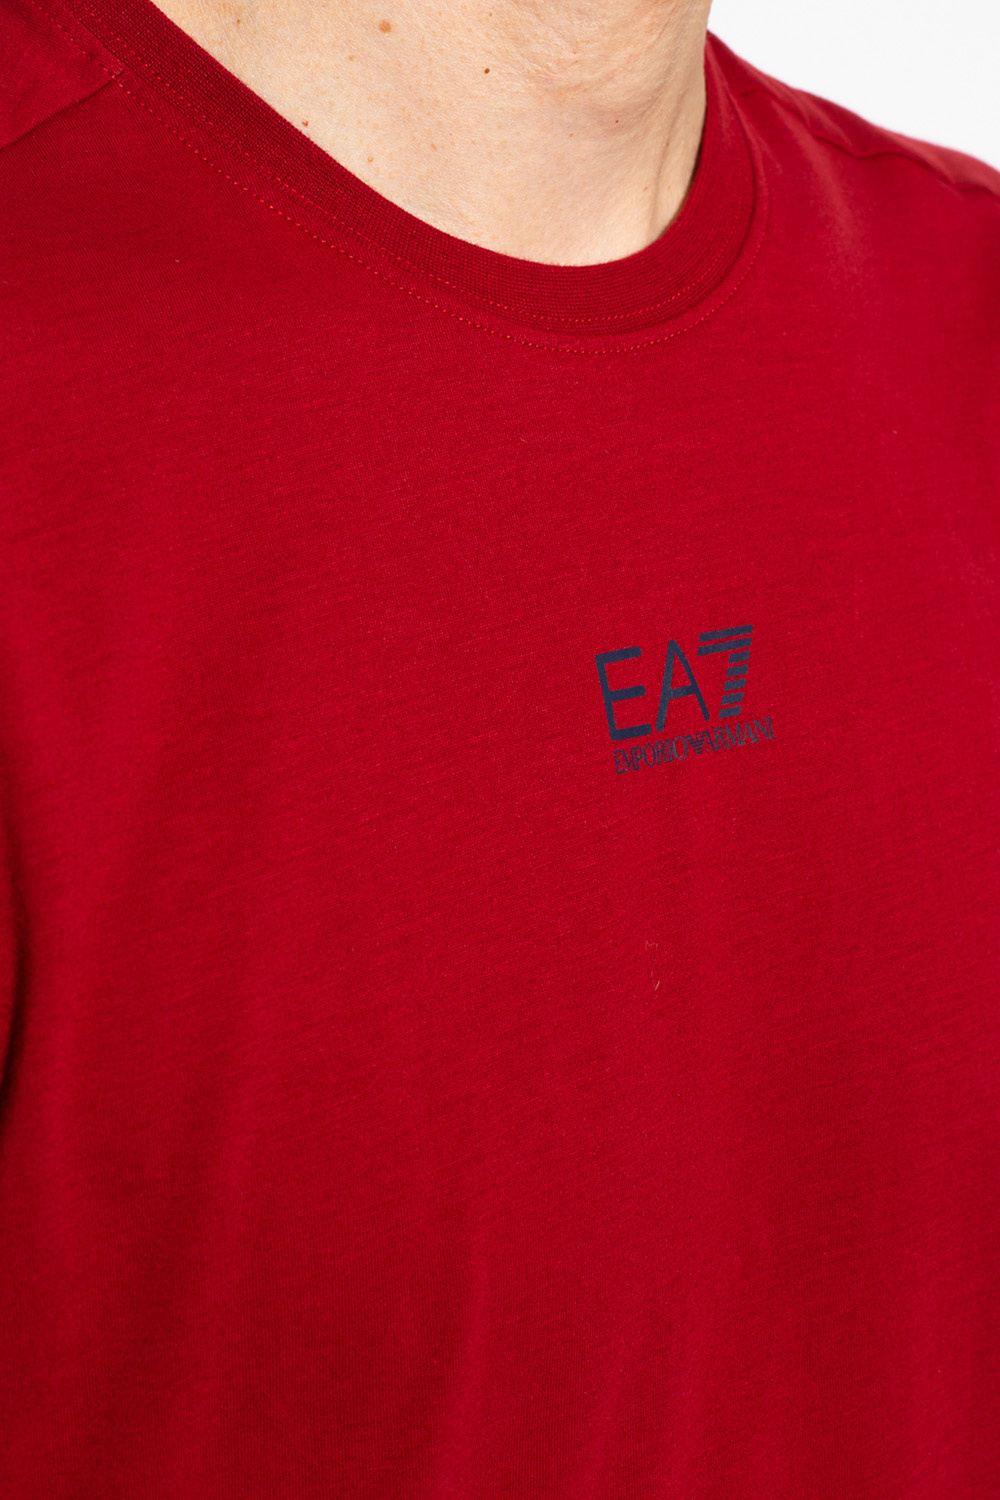 EA7 Emporio armani sandal Logo-printed T-shirt